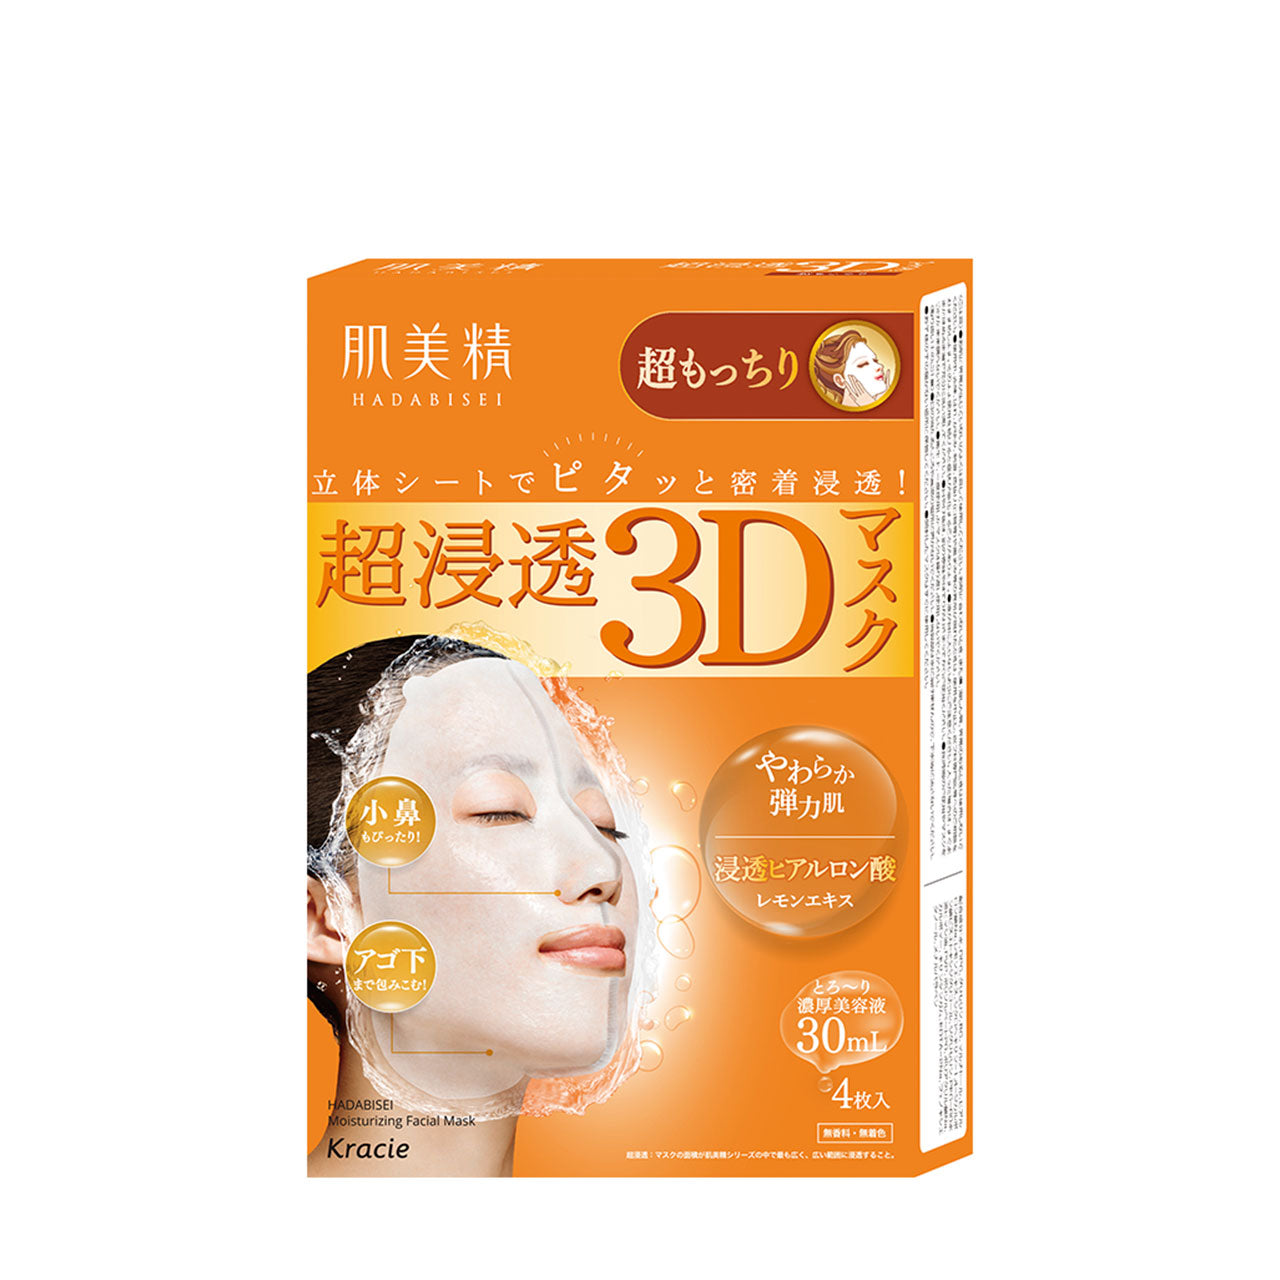 Kracie Hadabisei Advanced Penetrating 3D Face Mask Super Suppleness 4PCS | Sasa Global eShop